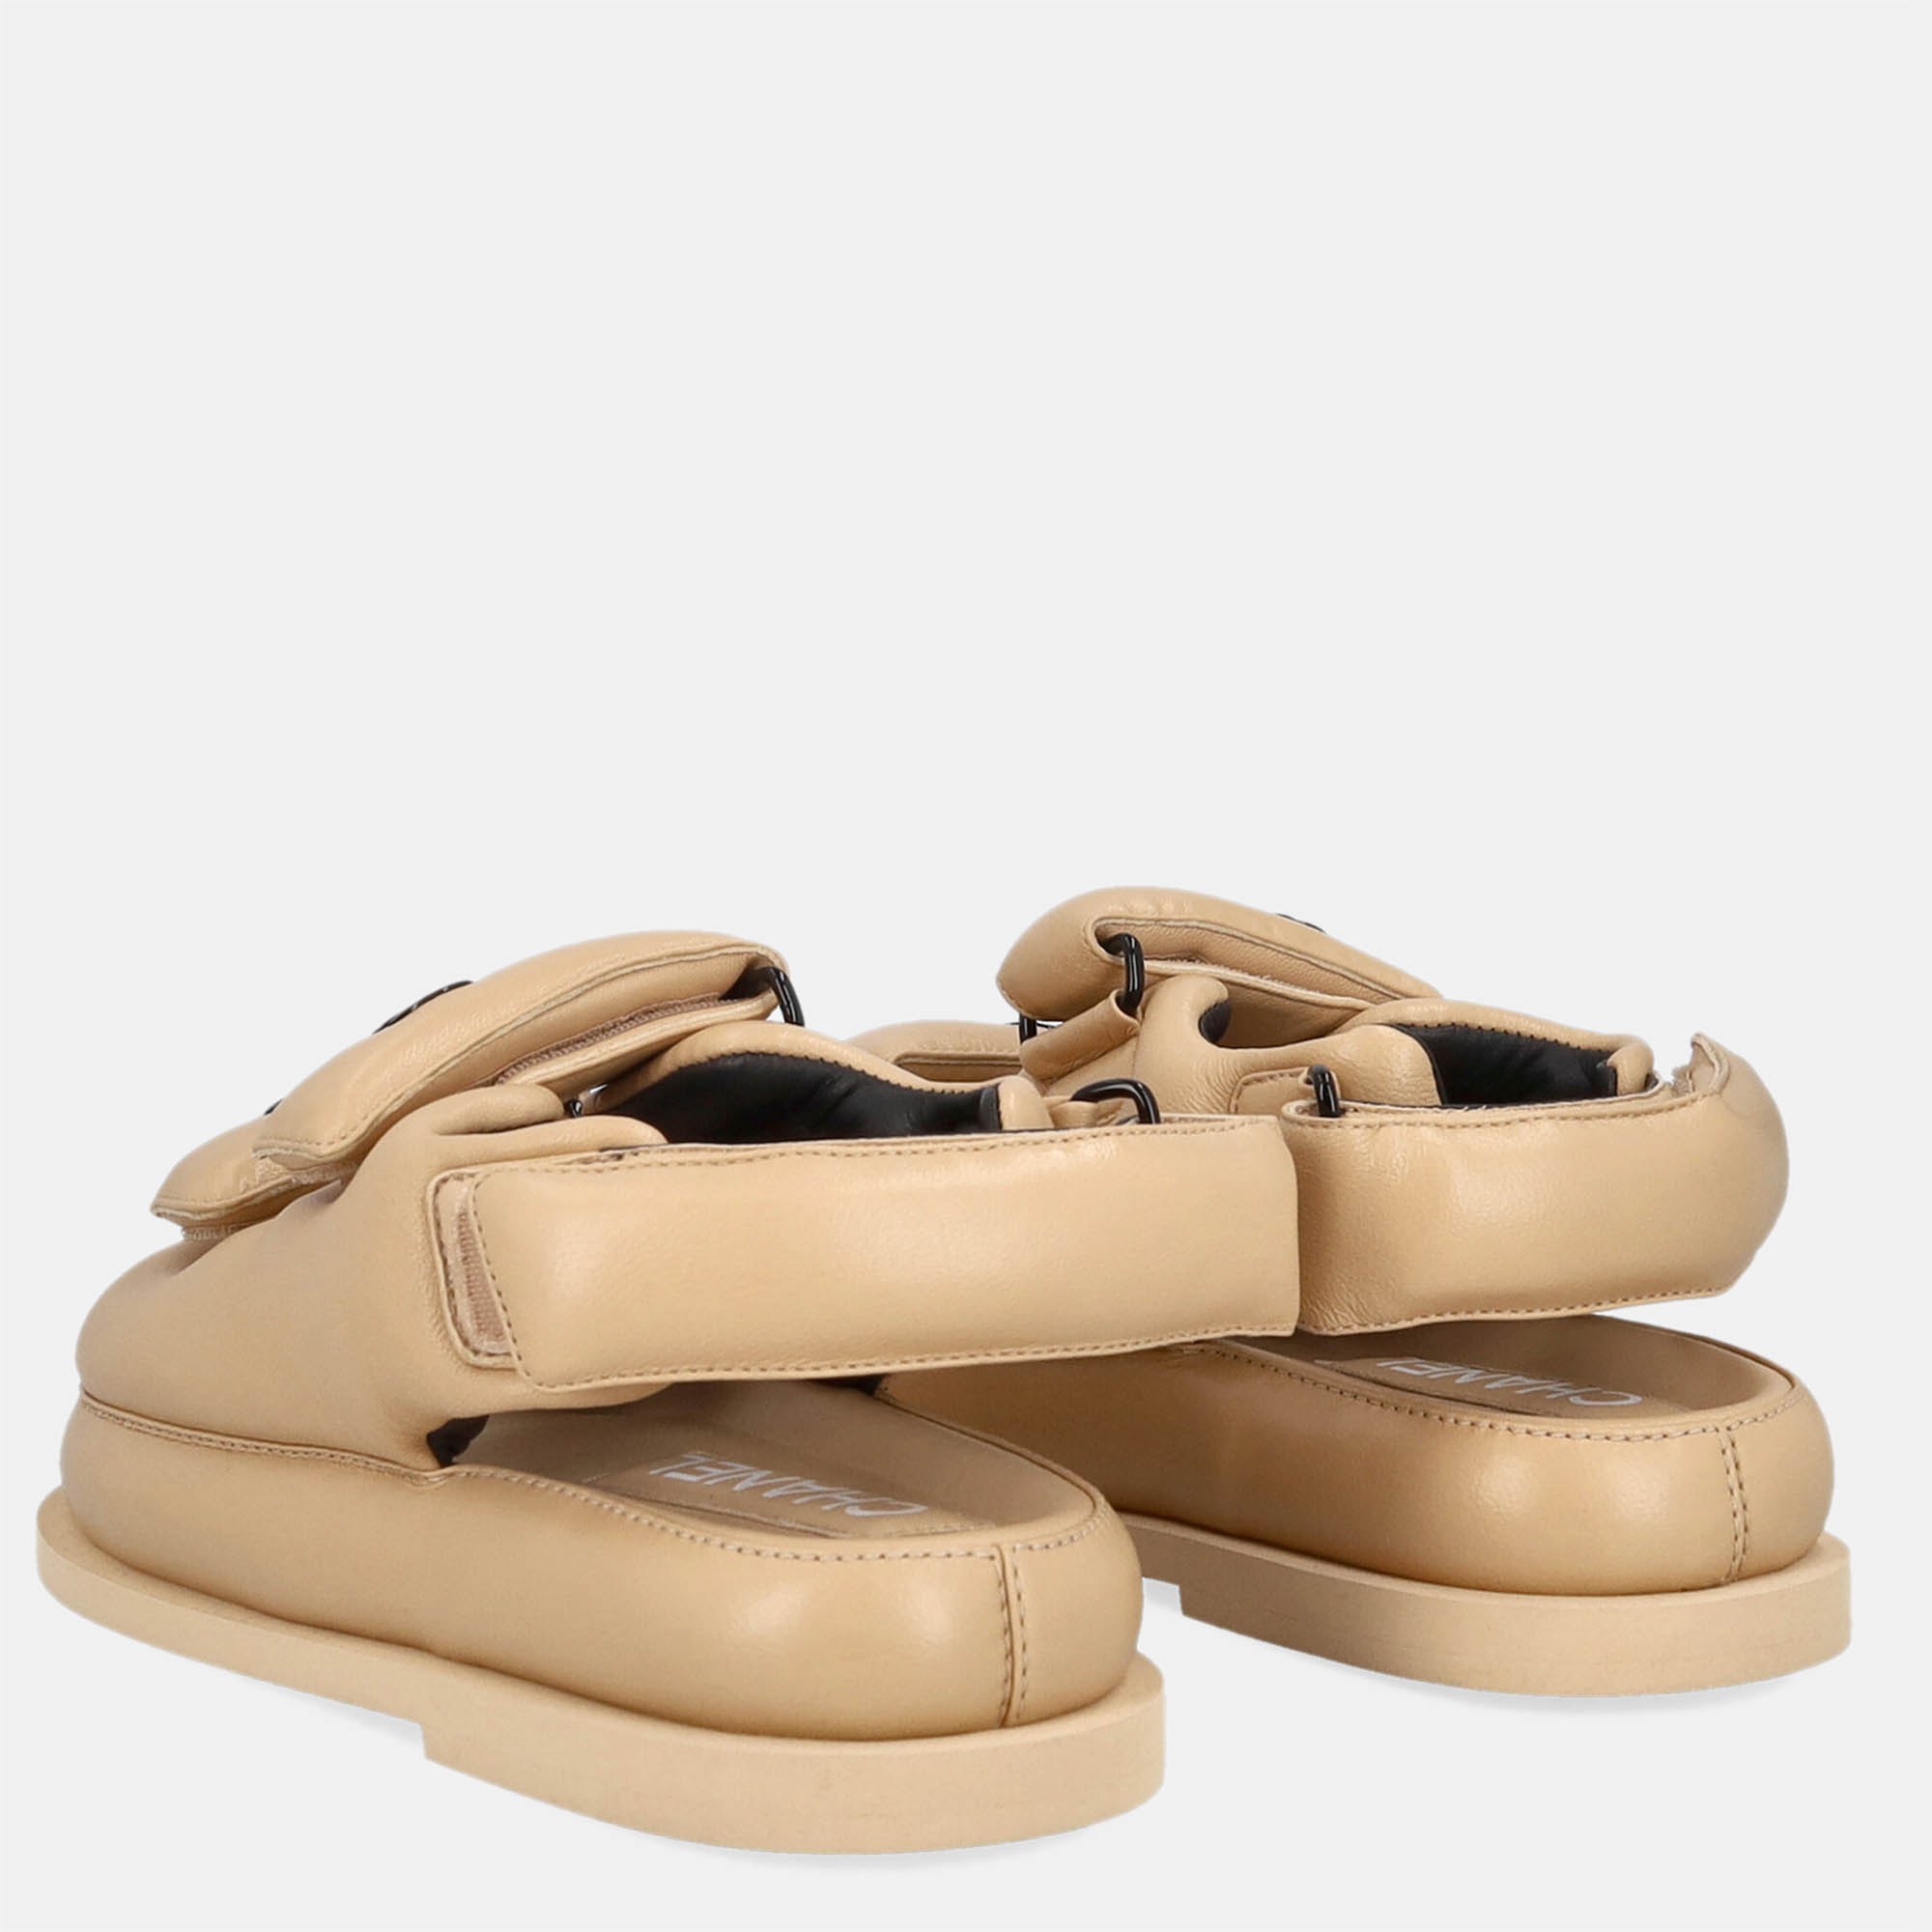 Chanel  Women's Leather Sandals - Beige - EU 35